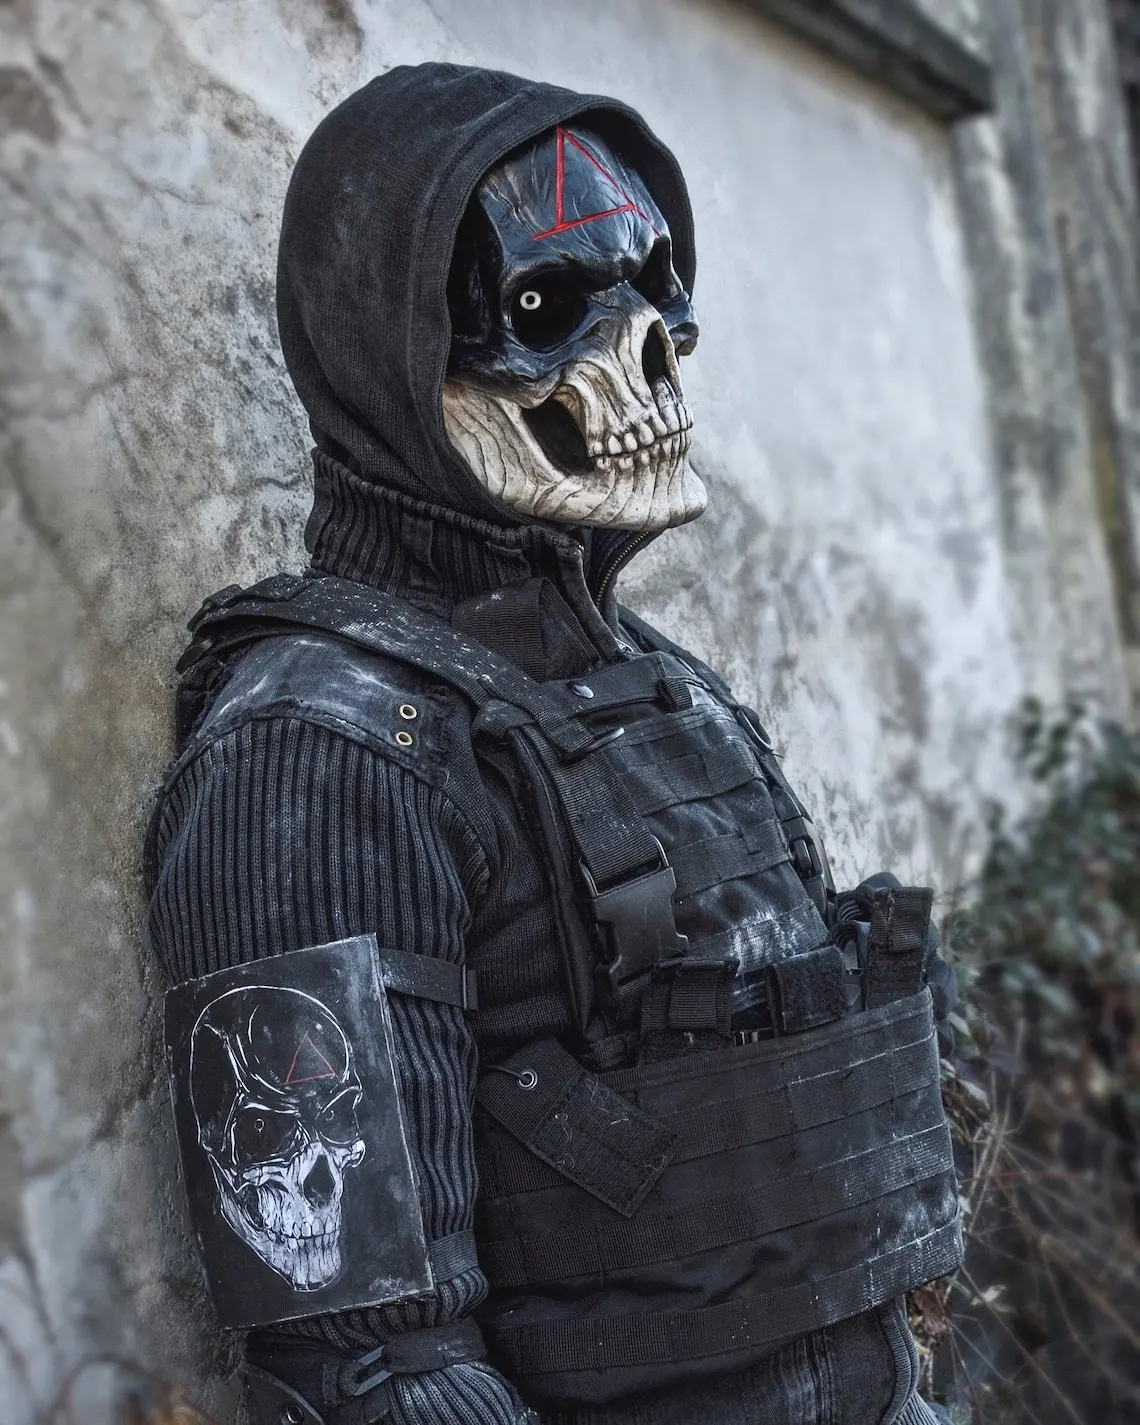 1pc Death Warrior Skull Latex Mask Full Head Devil Skull Halloween